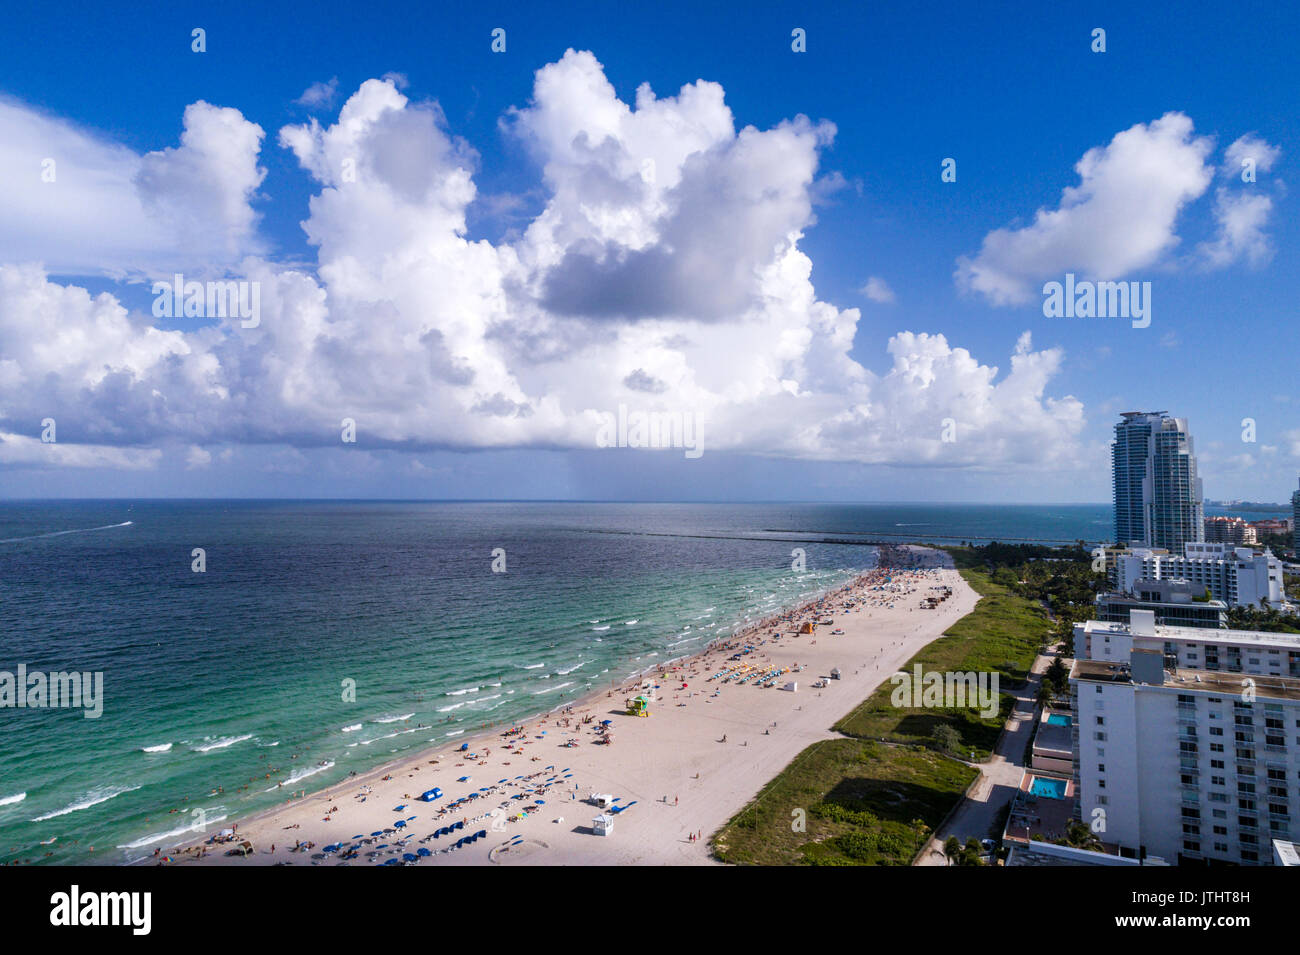 Miami Beach Florida, vista aérea desde arriba, vista desde arriba, vista desde arriba, Océano Atlántico, arena, baños de sol, FL17080611d Foto de stock